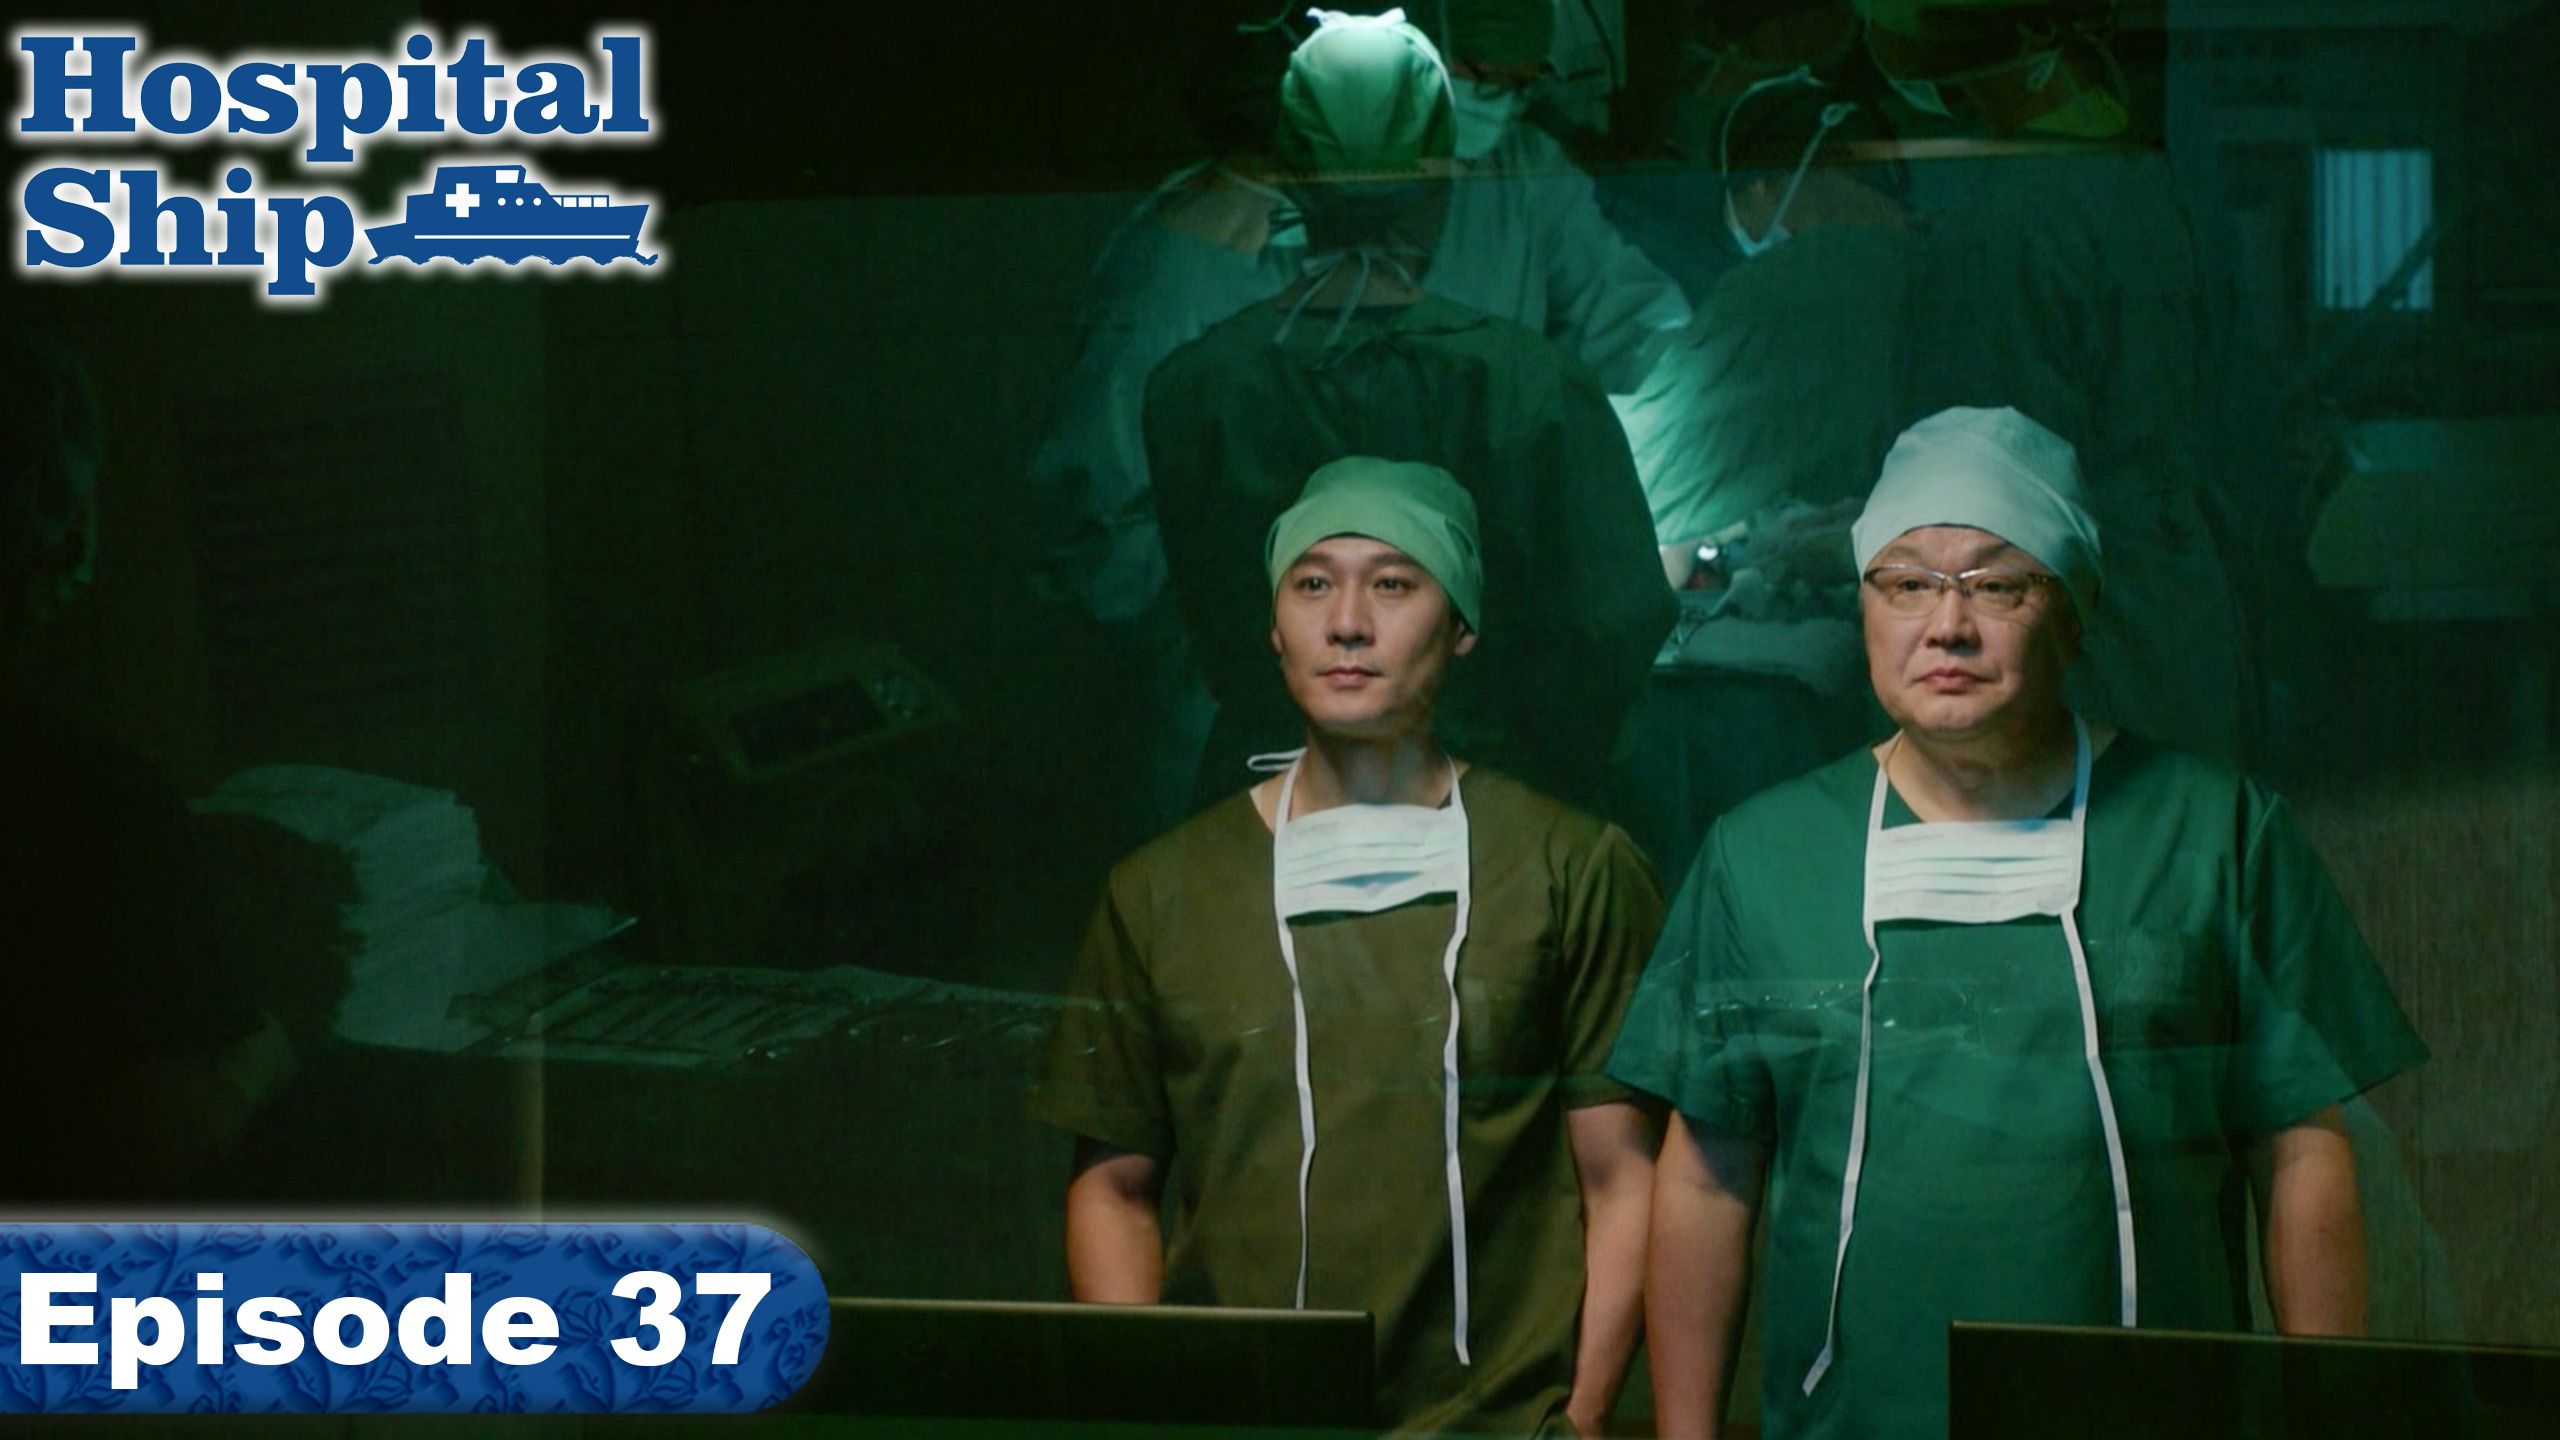 Episode 37 - Hospital Ship